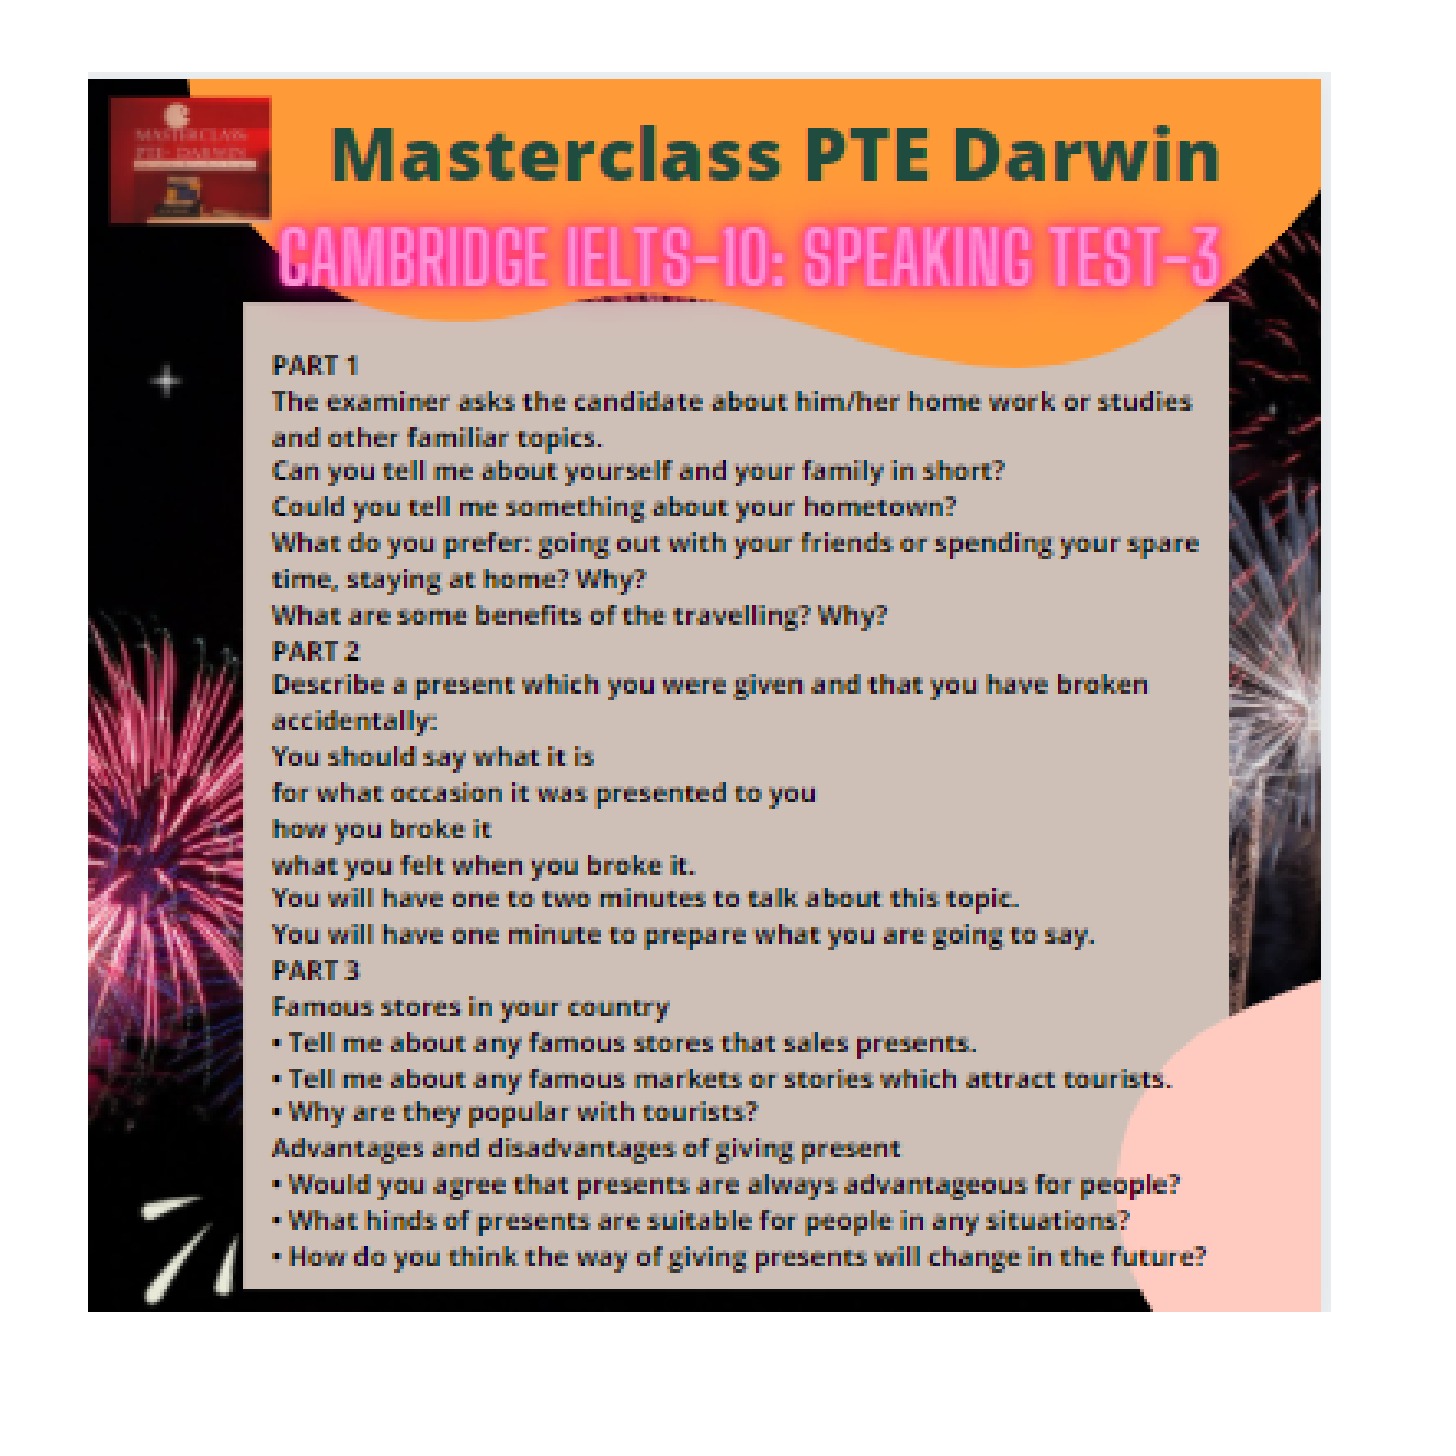 Cambridge IELTS-10: Speaking test-3 @Masterclass PTE Darwin, Australia.